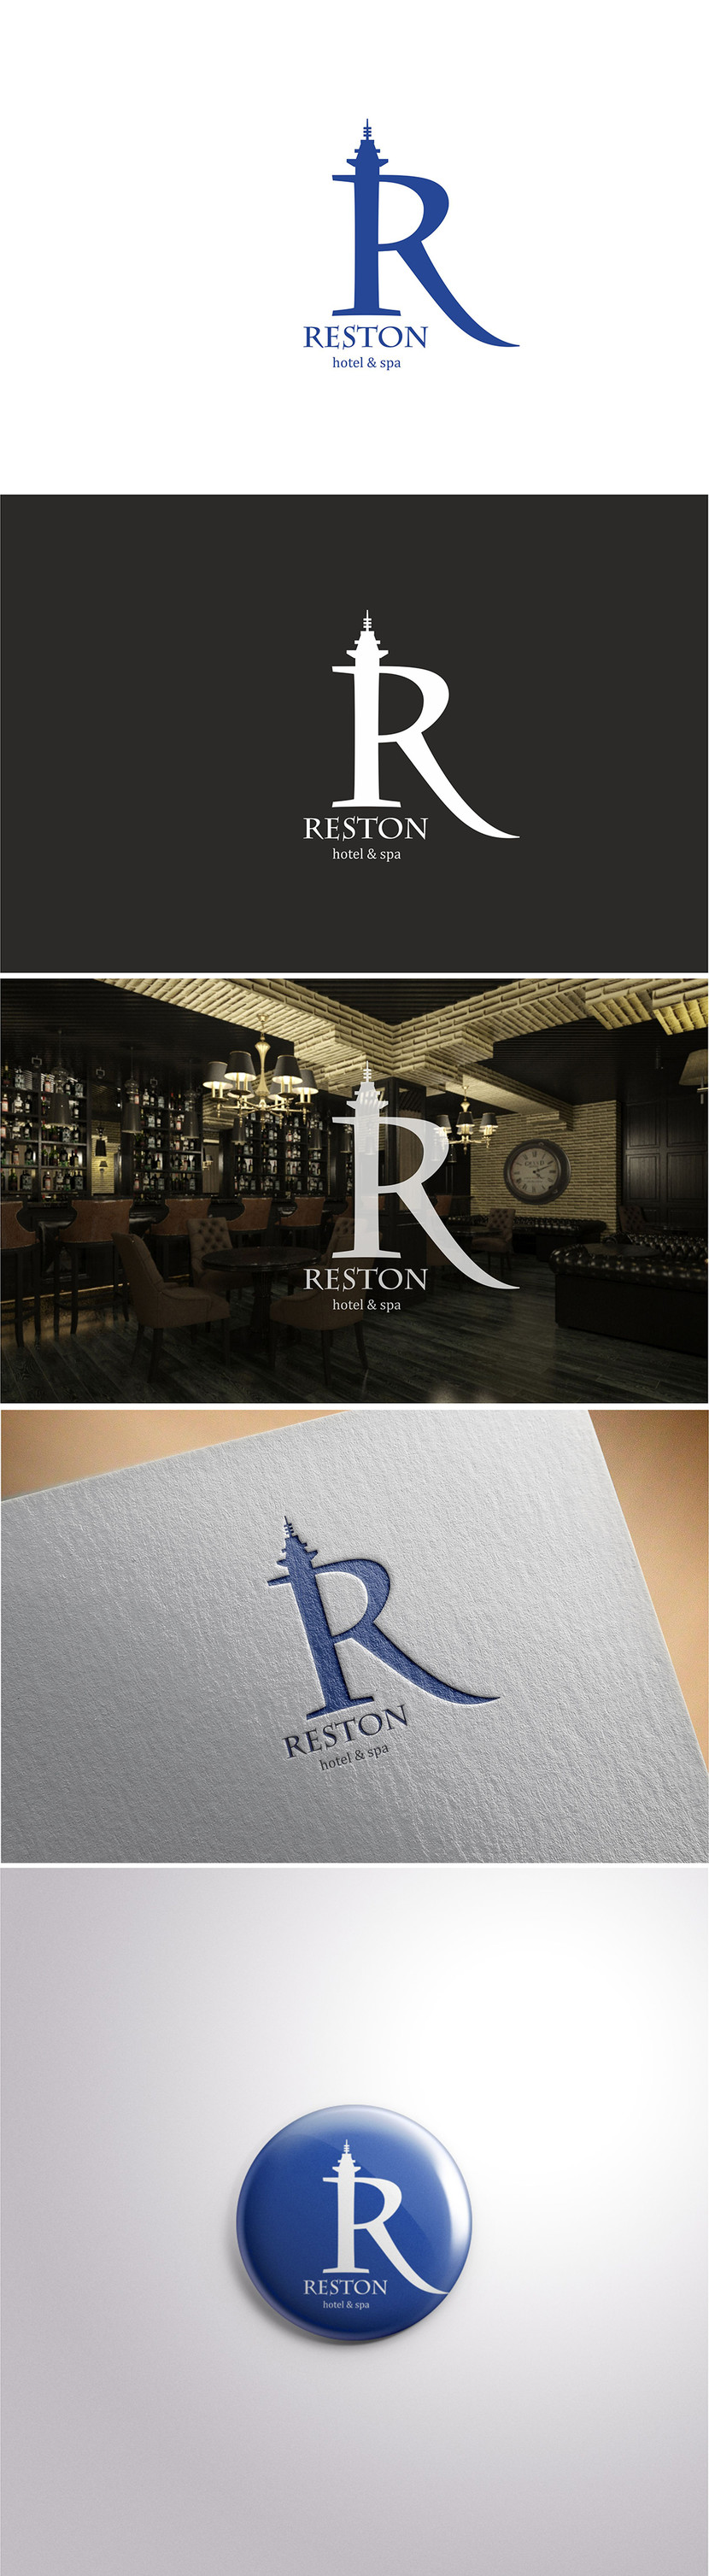 логотип RESTON. - Фирменный стиль гостиницы: Reston hotel & Spa